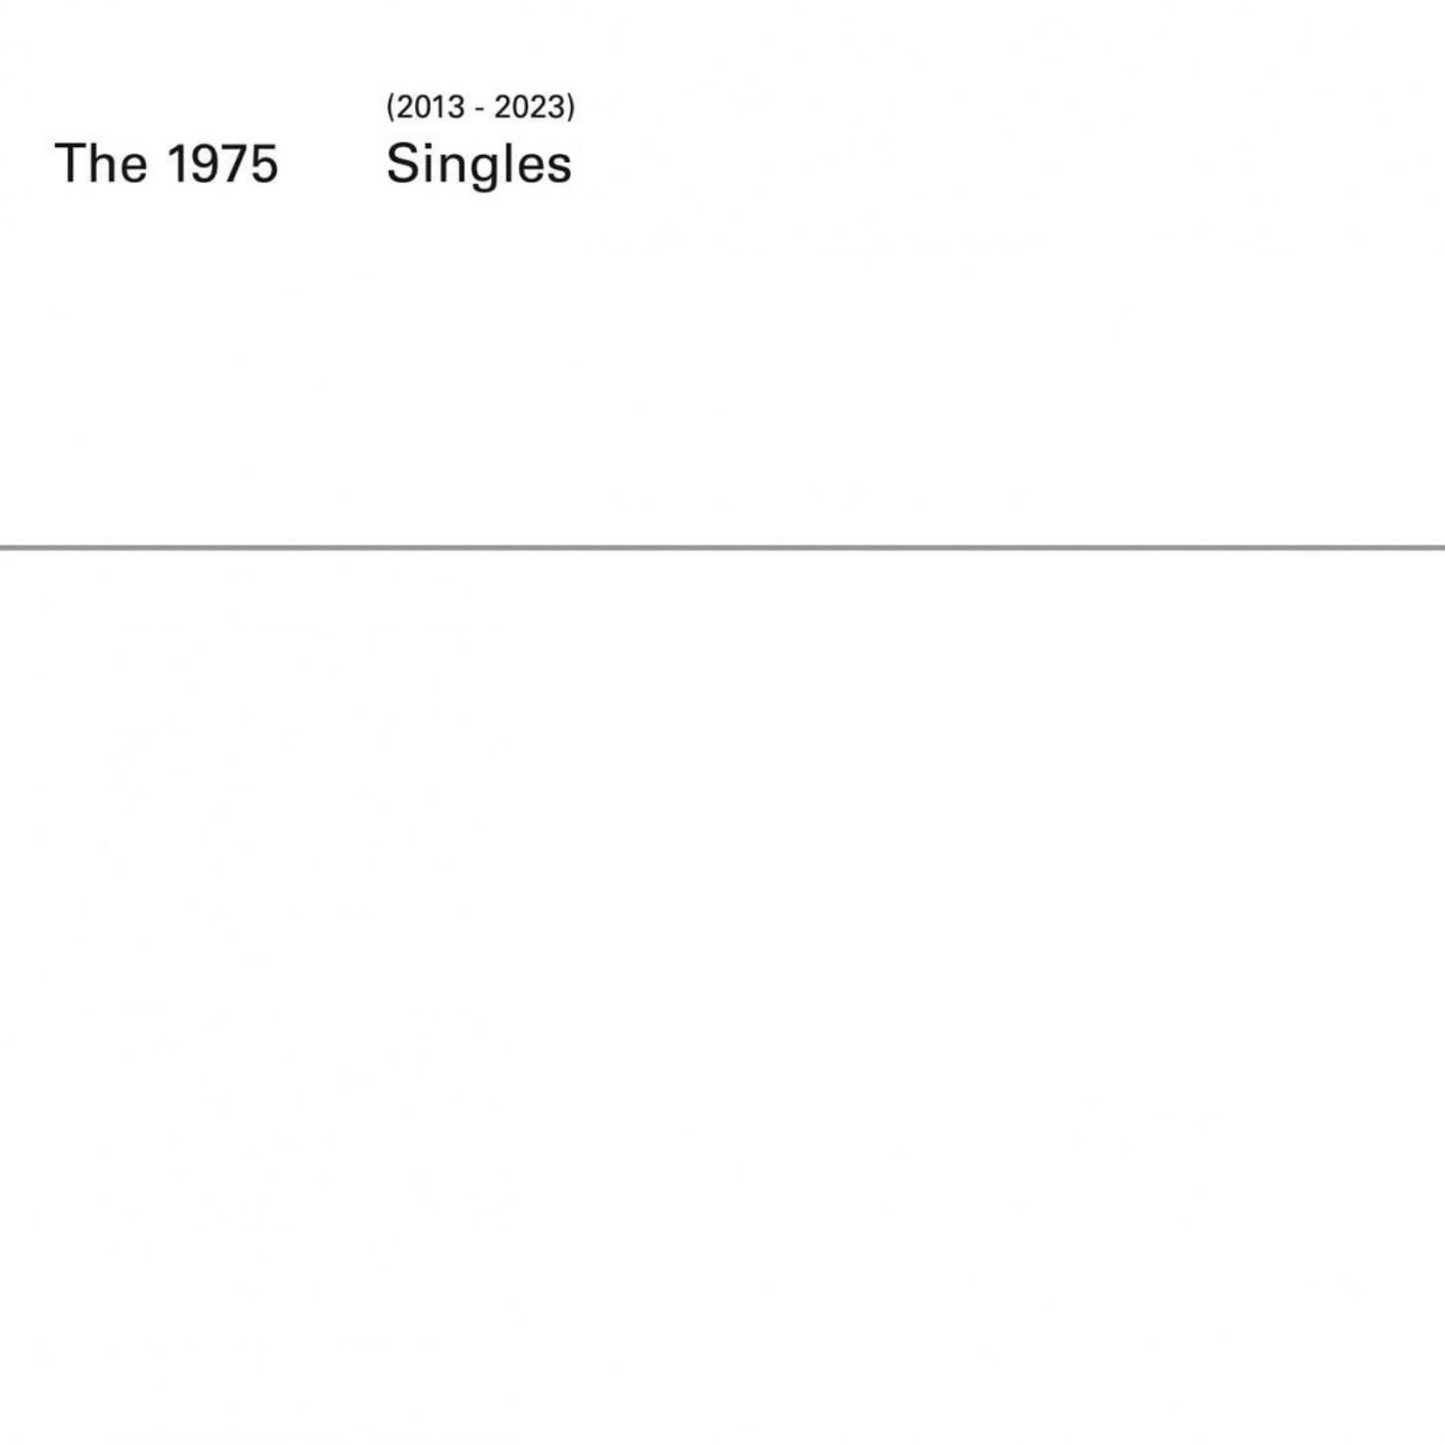 The 1975: Singles (2013-2023) Japanese 7" Box Set